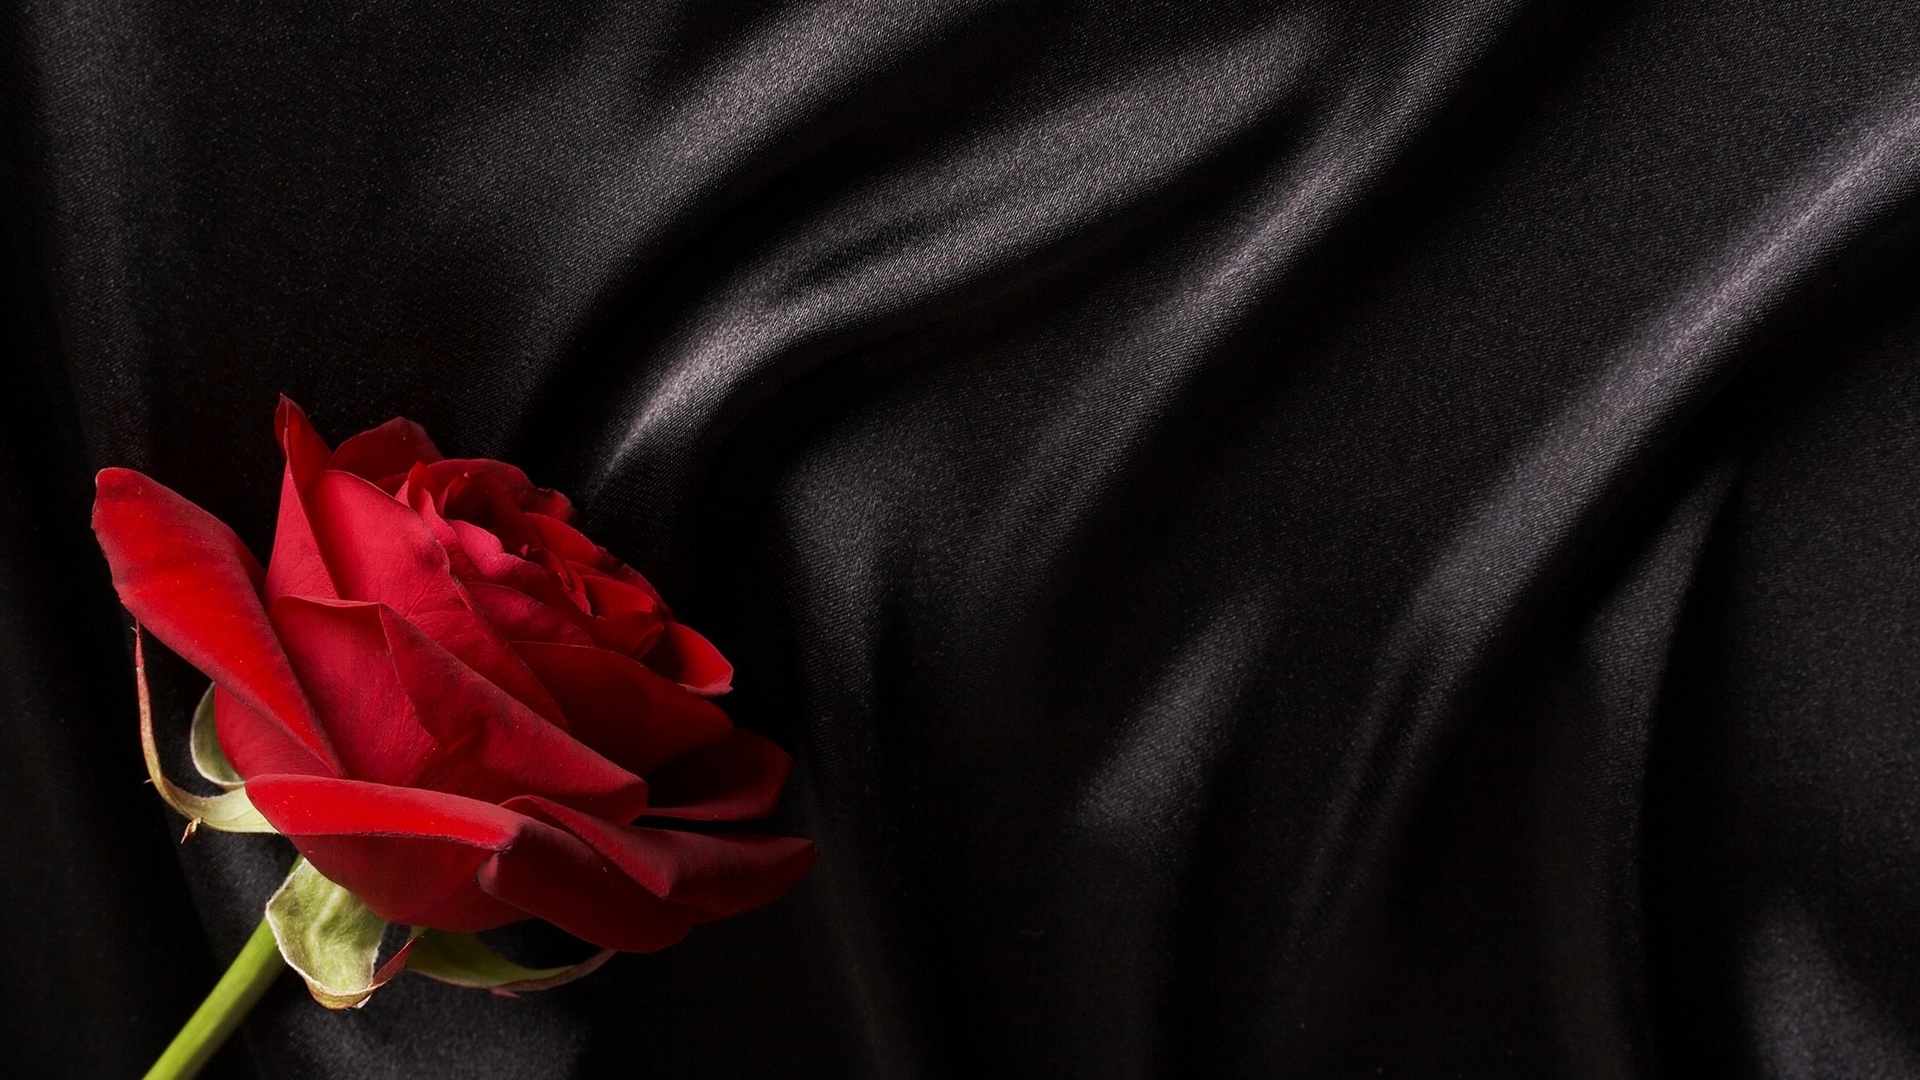 Red Rose On Black Silk Jpg